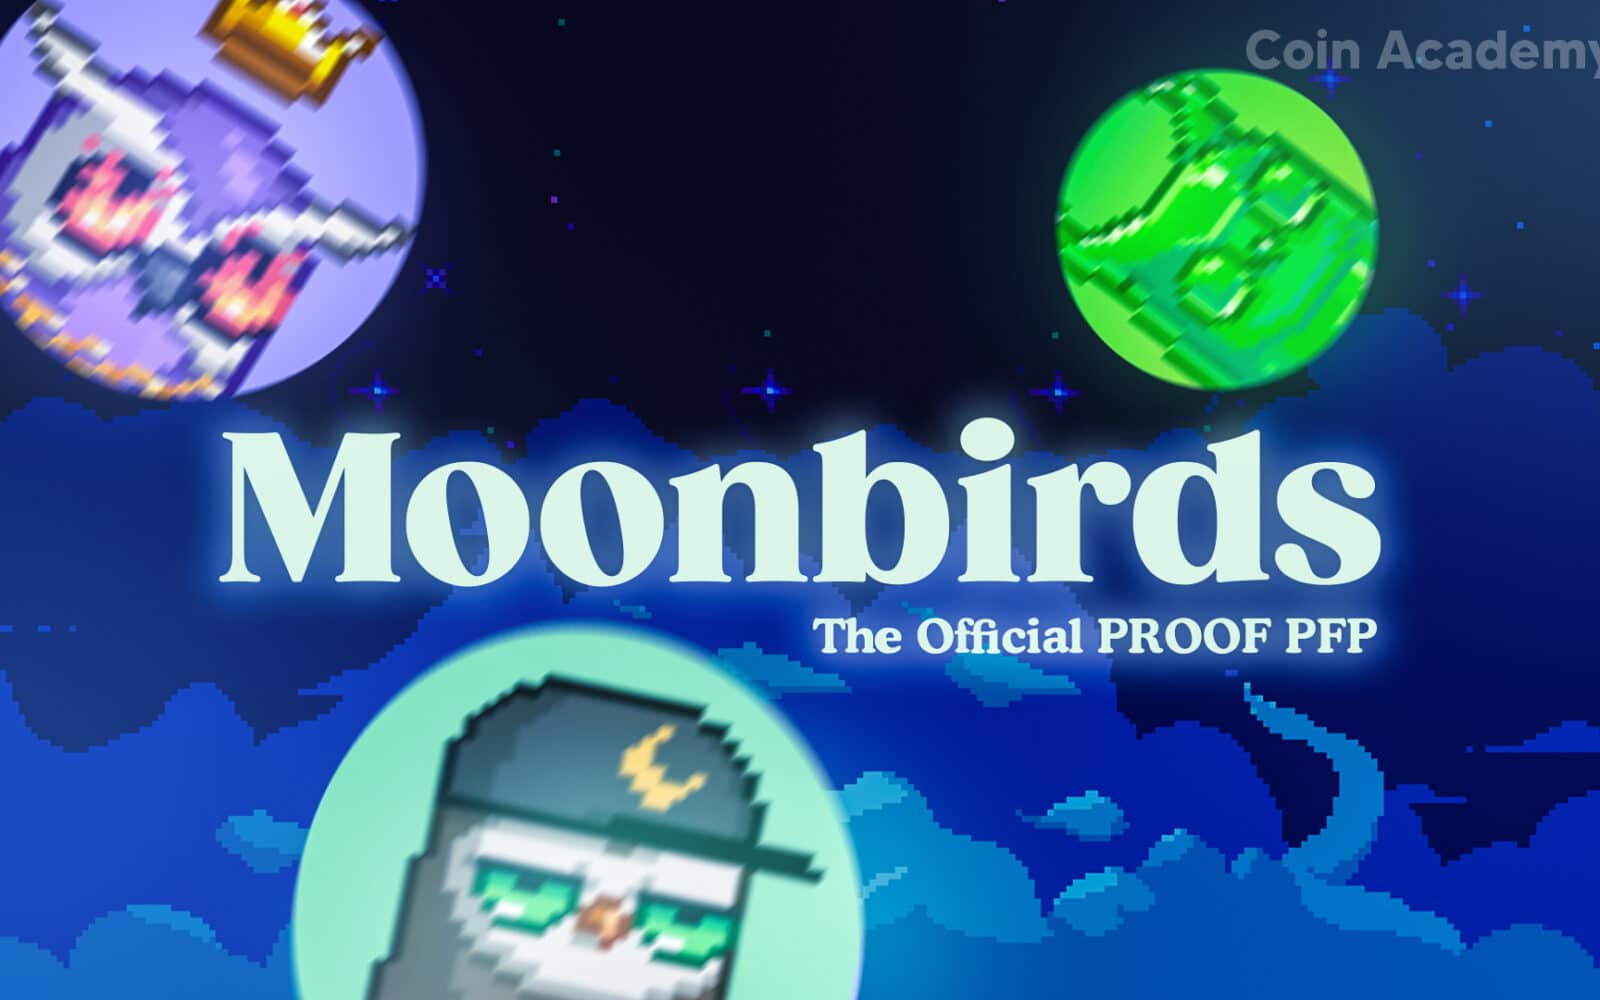 moonbirds nft